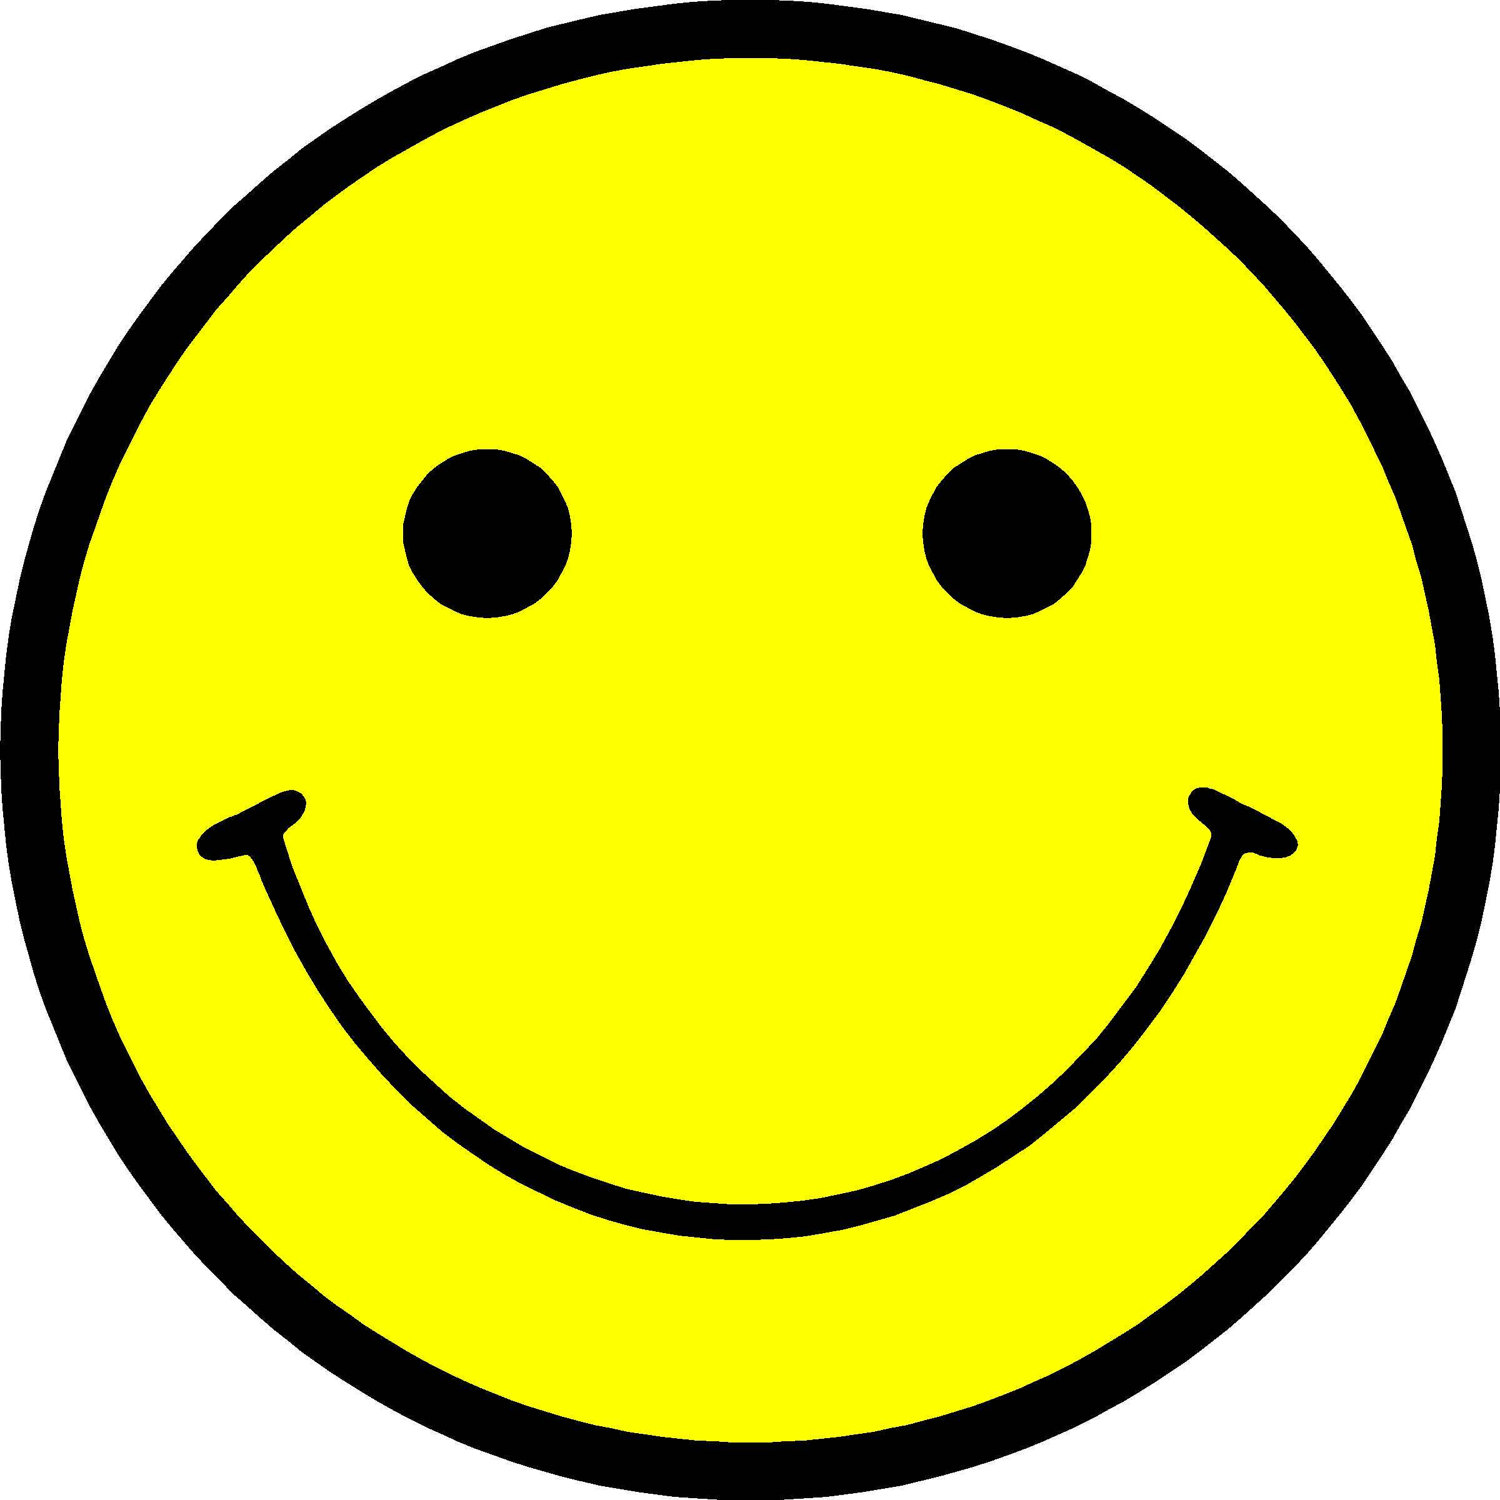 Smiley Face Symbols - ClipArt Best